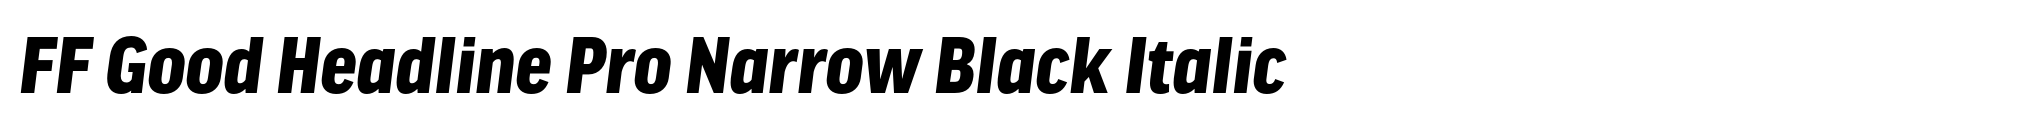 FF Good Headline Pro Narrow Black Italic image